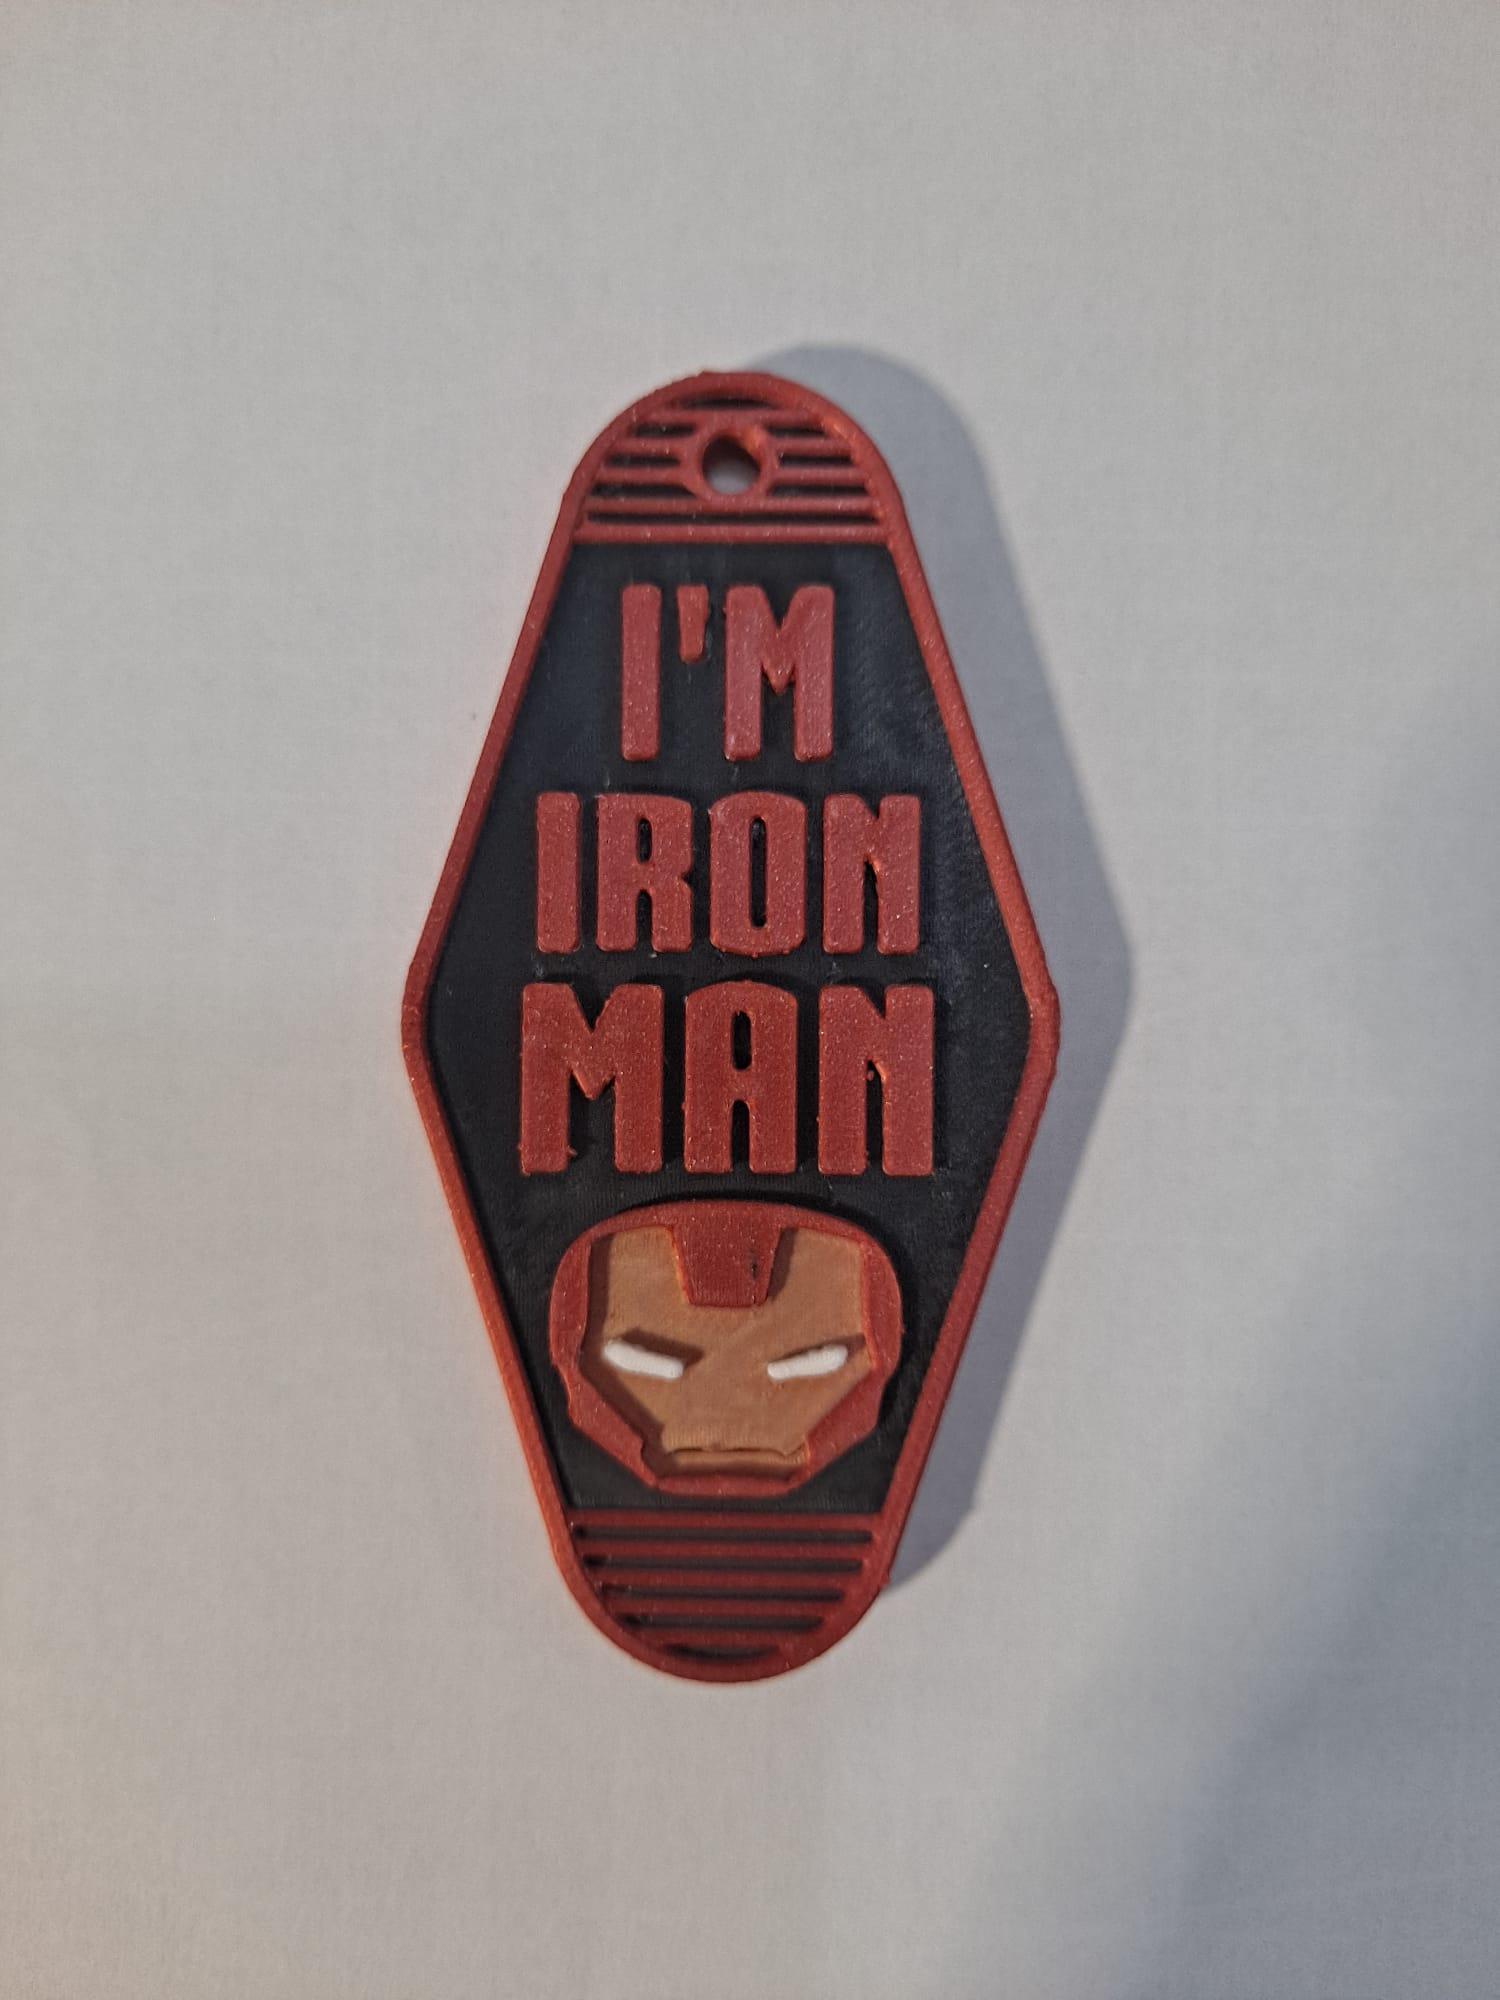 Iron man keychain 3d model